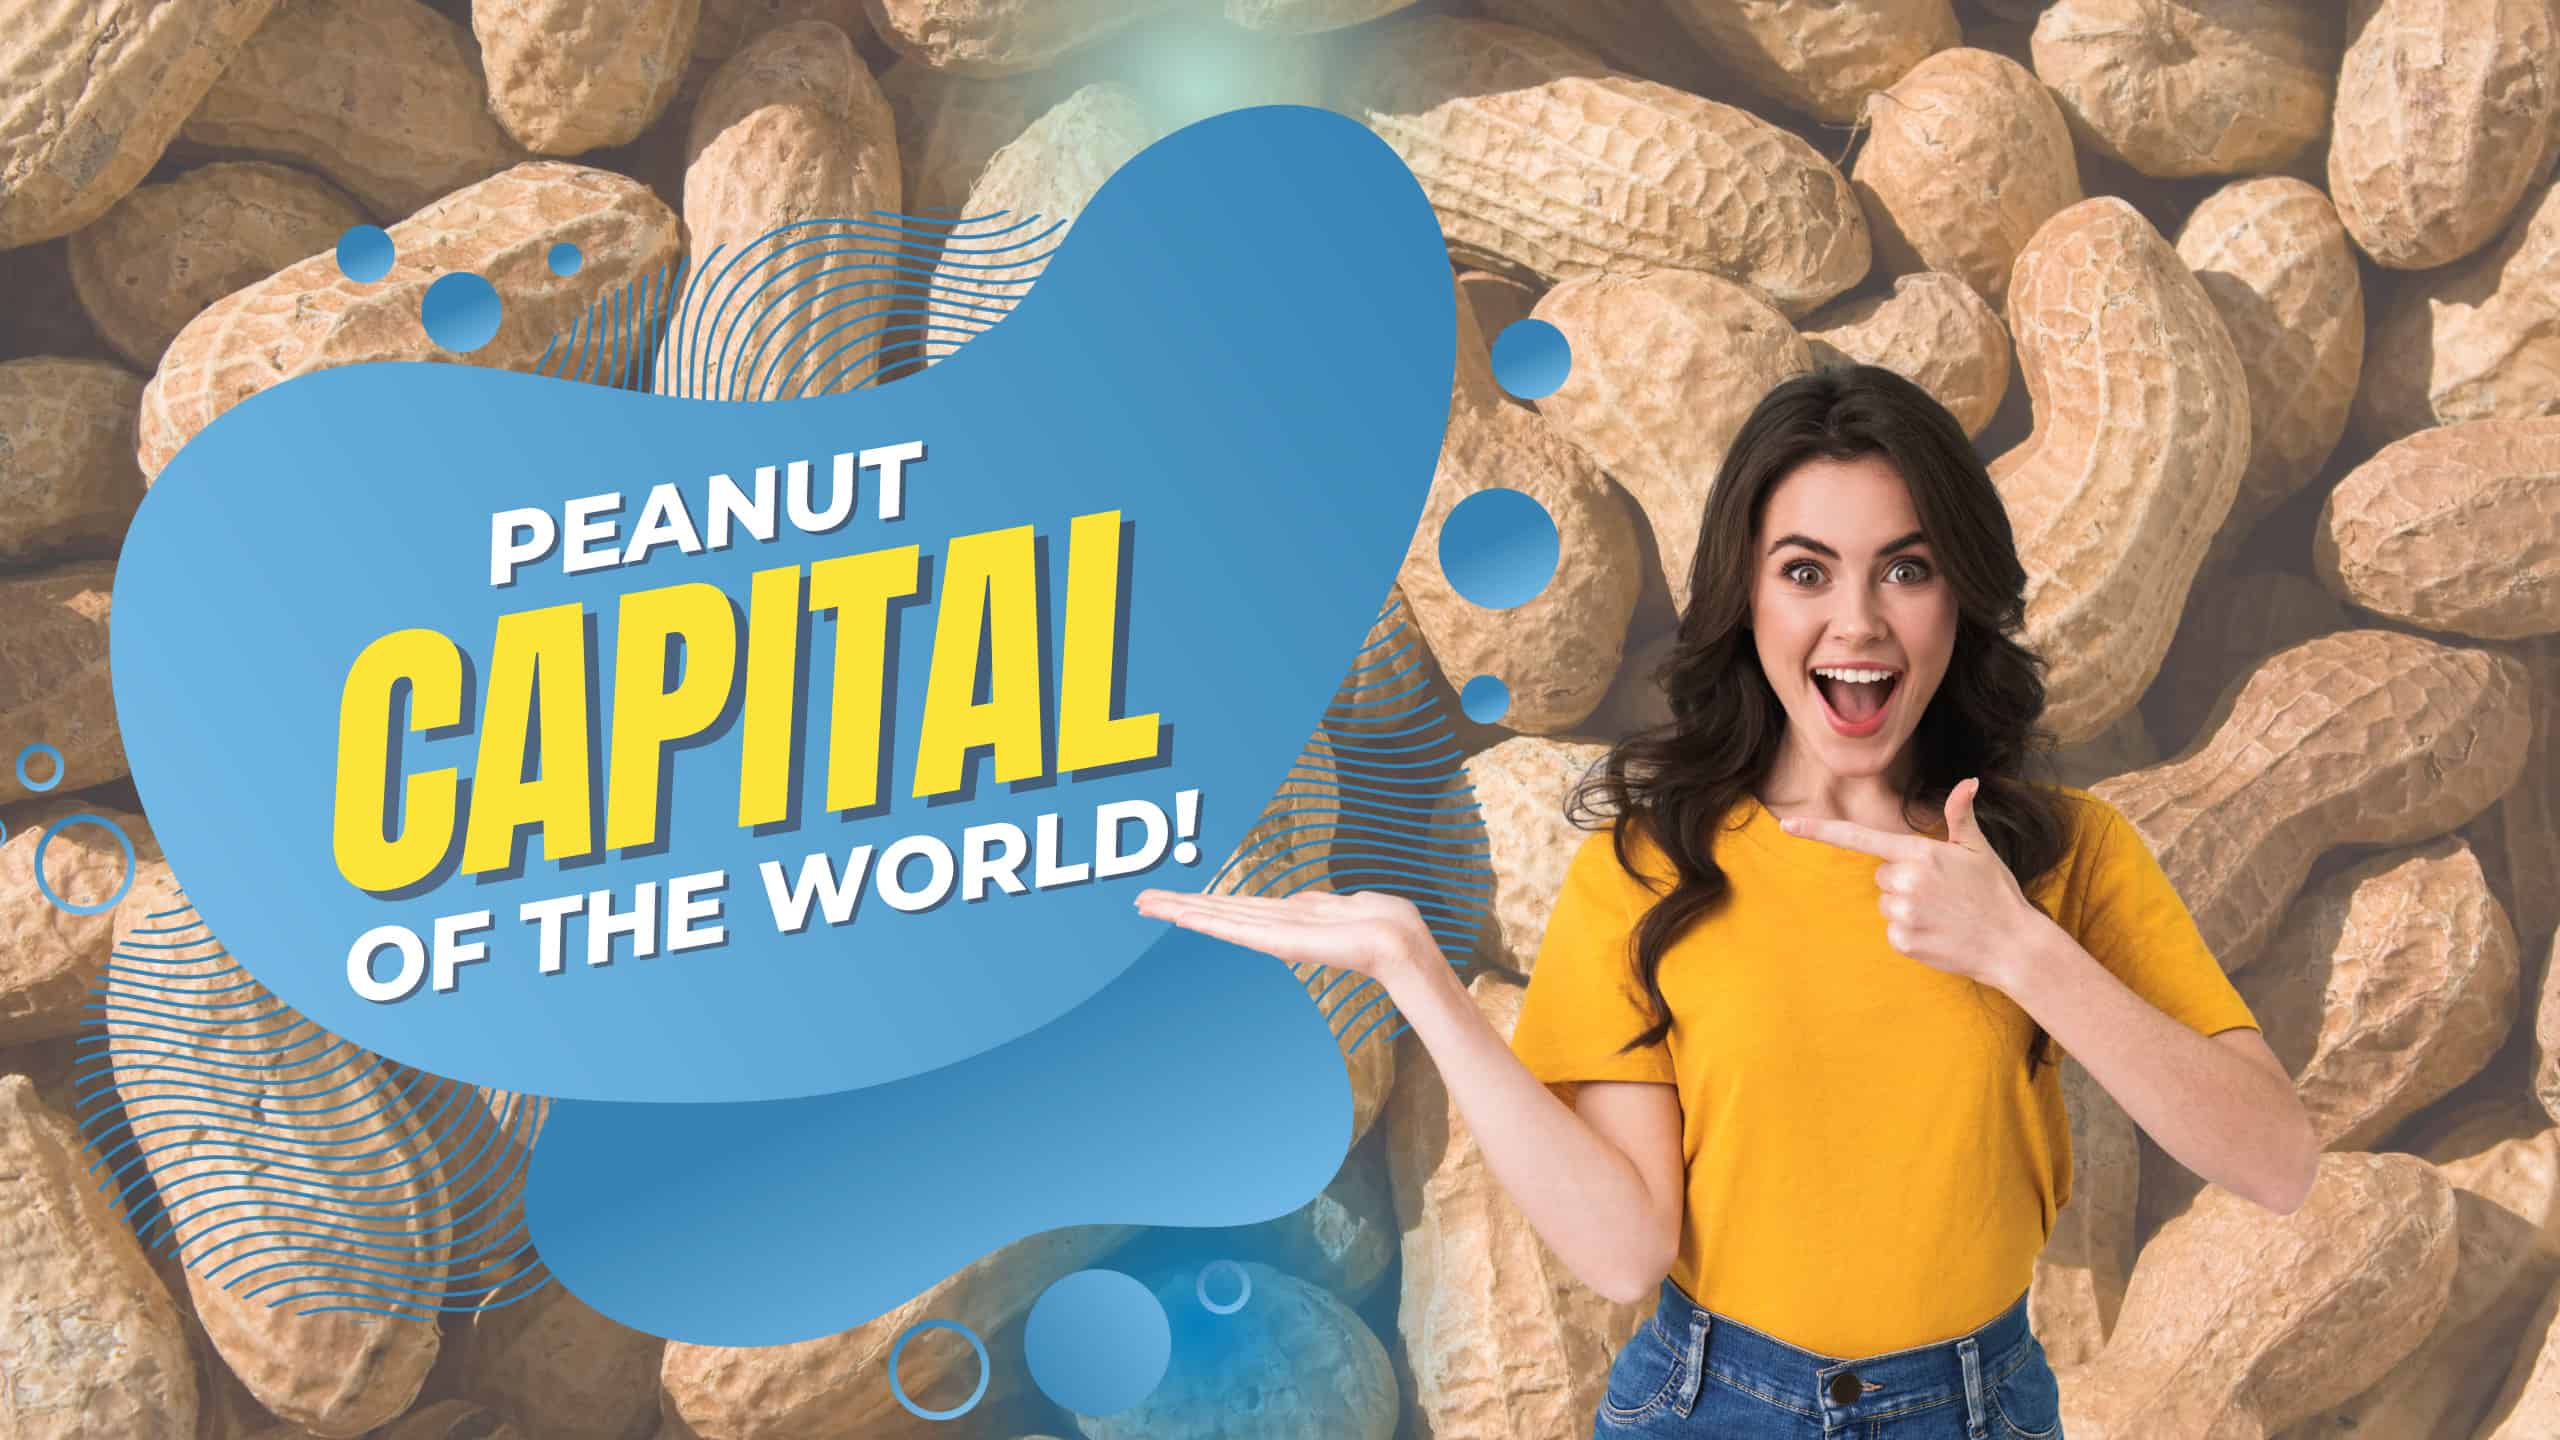 Peanut Capital of the World